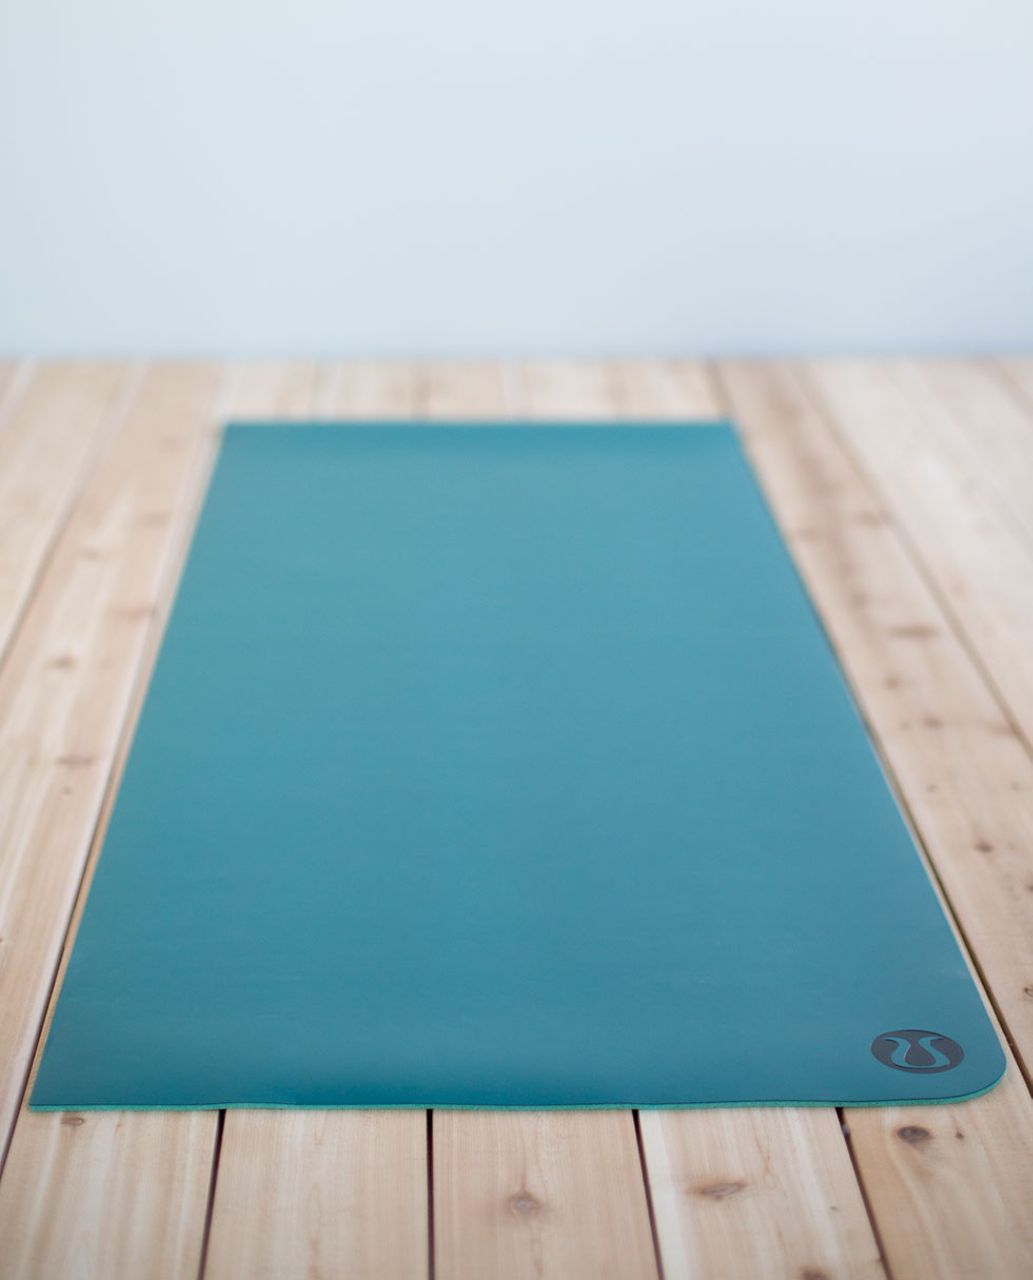 lululemon yoga mat stains